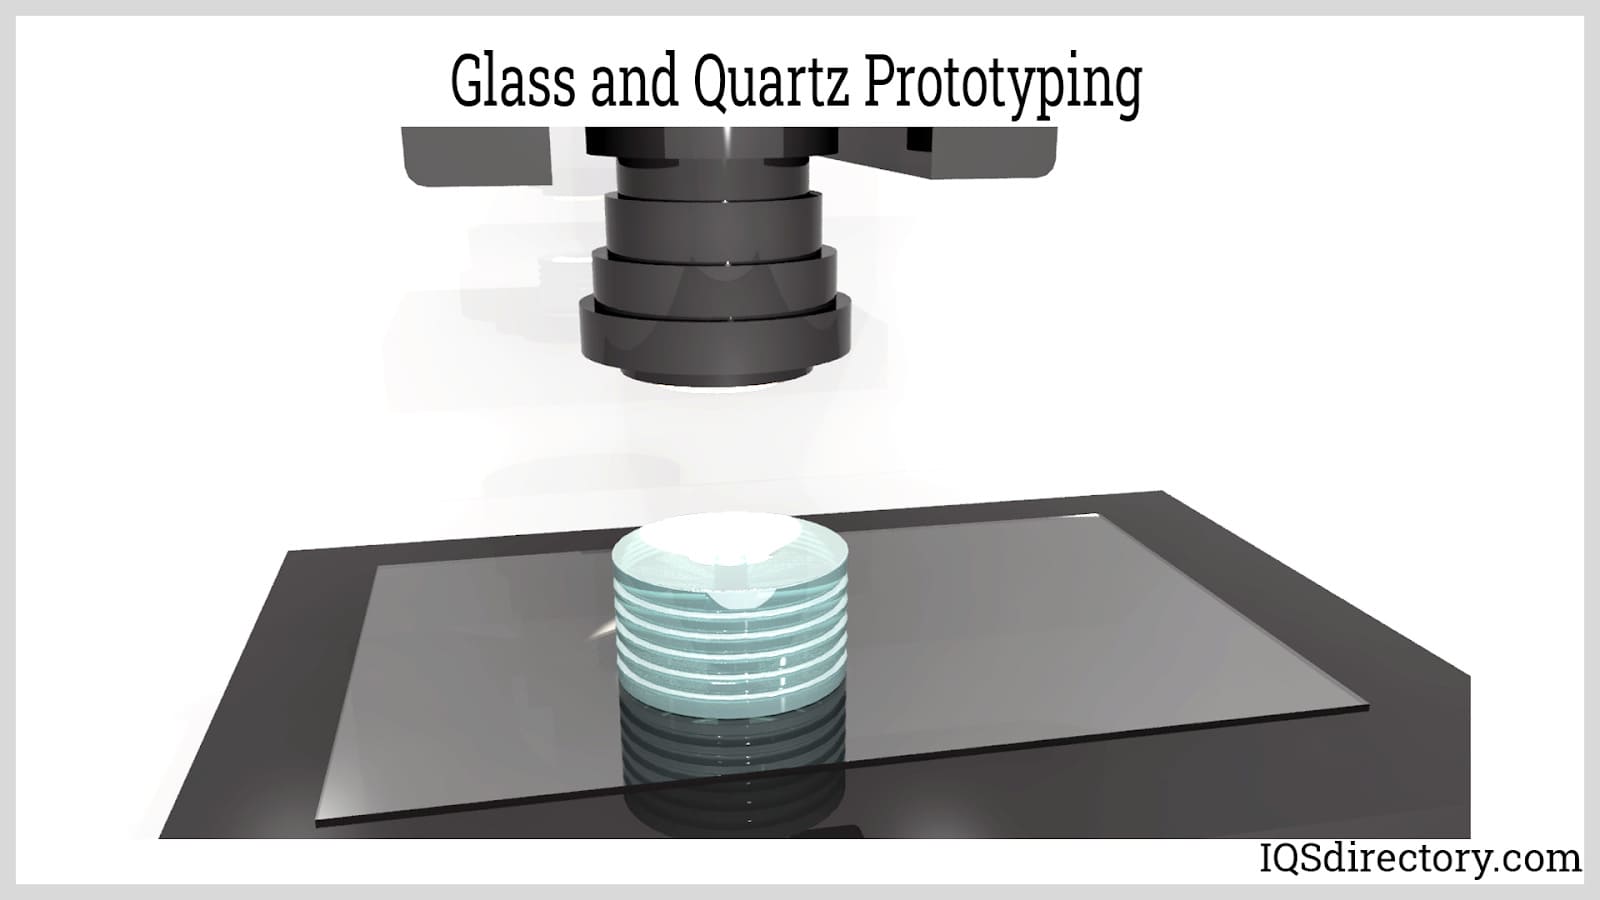 Glass and Quartz Prototyping